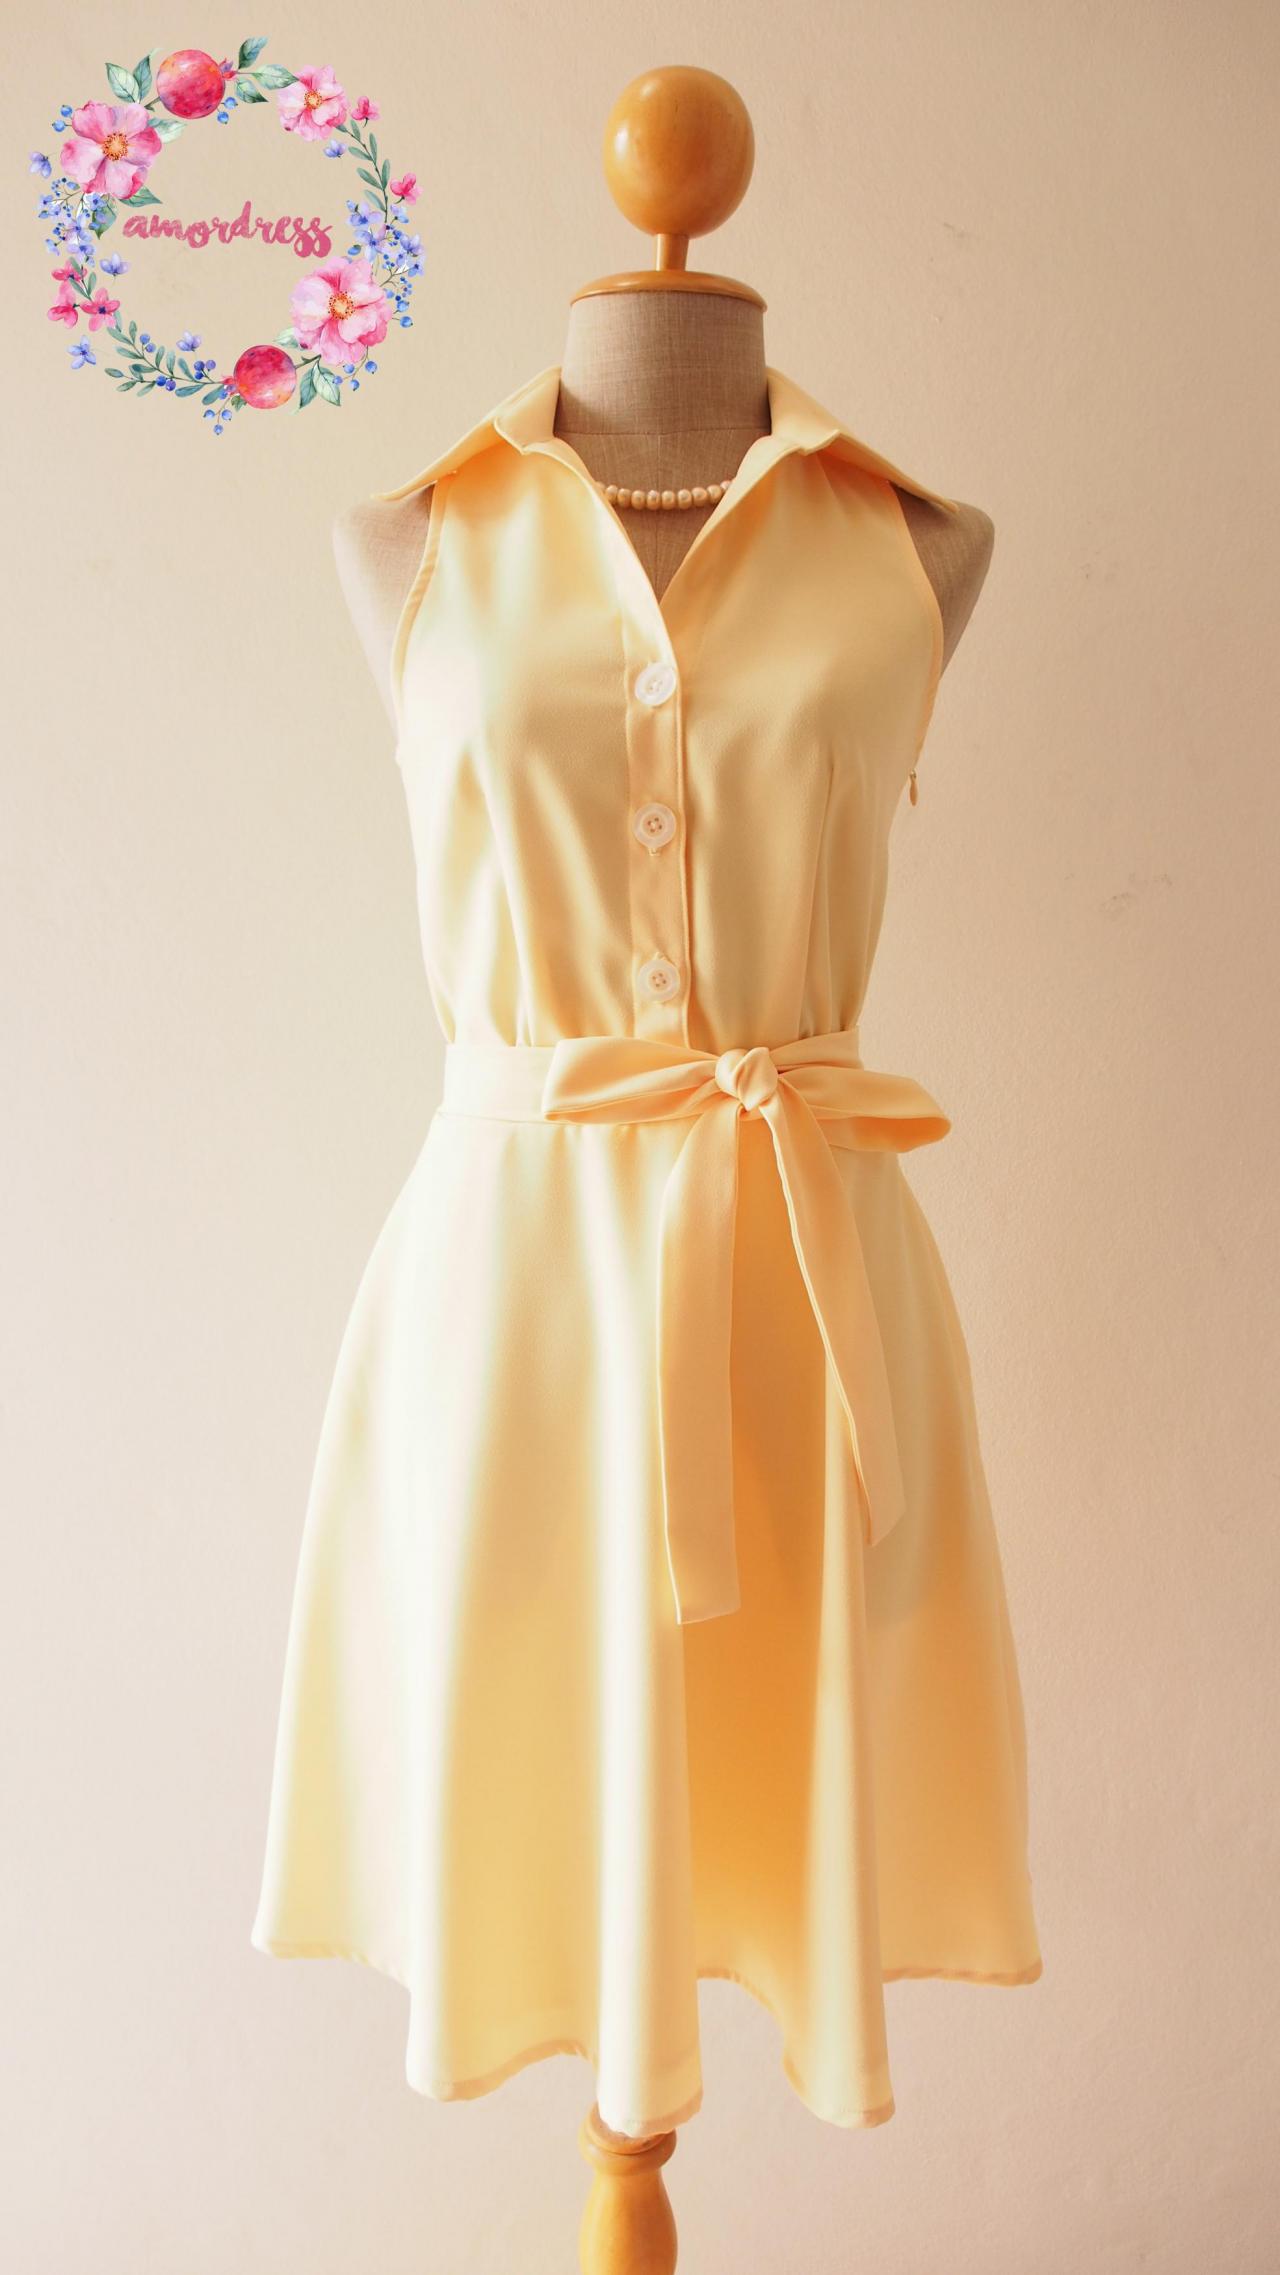 Pastel Yellow Dress,Yellow Bridesmaid Dress, Yellow Summer Dress, Yellow Skater Dress, Shirt Dress, Formal Dress, Midi Dress, Vintage Sundress, Vintage Inspired Dress, - DOWNTOWN - XS-XL, Custom